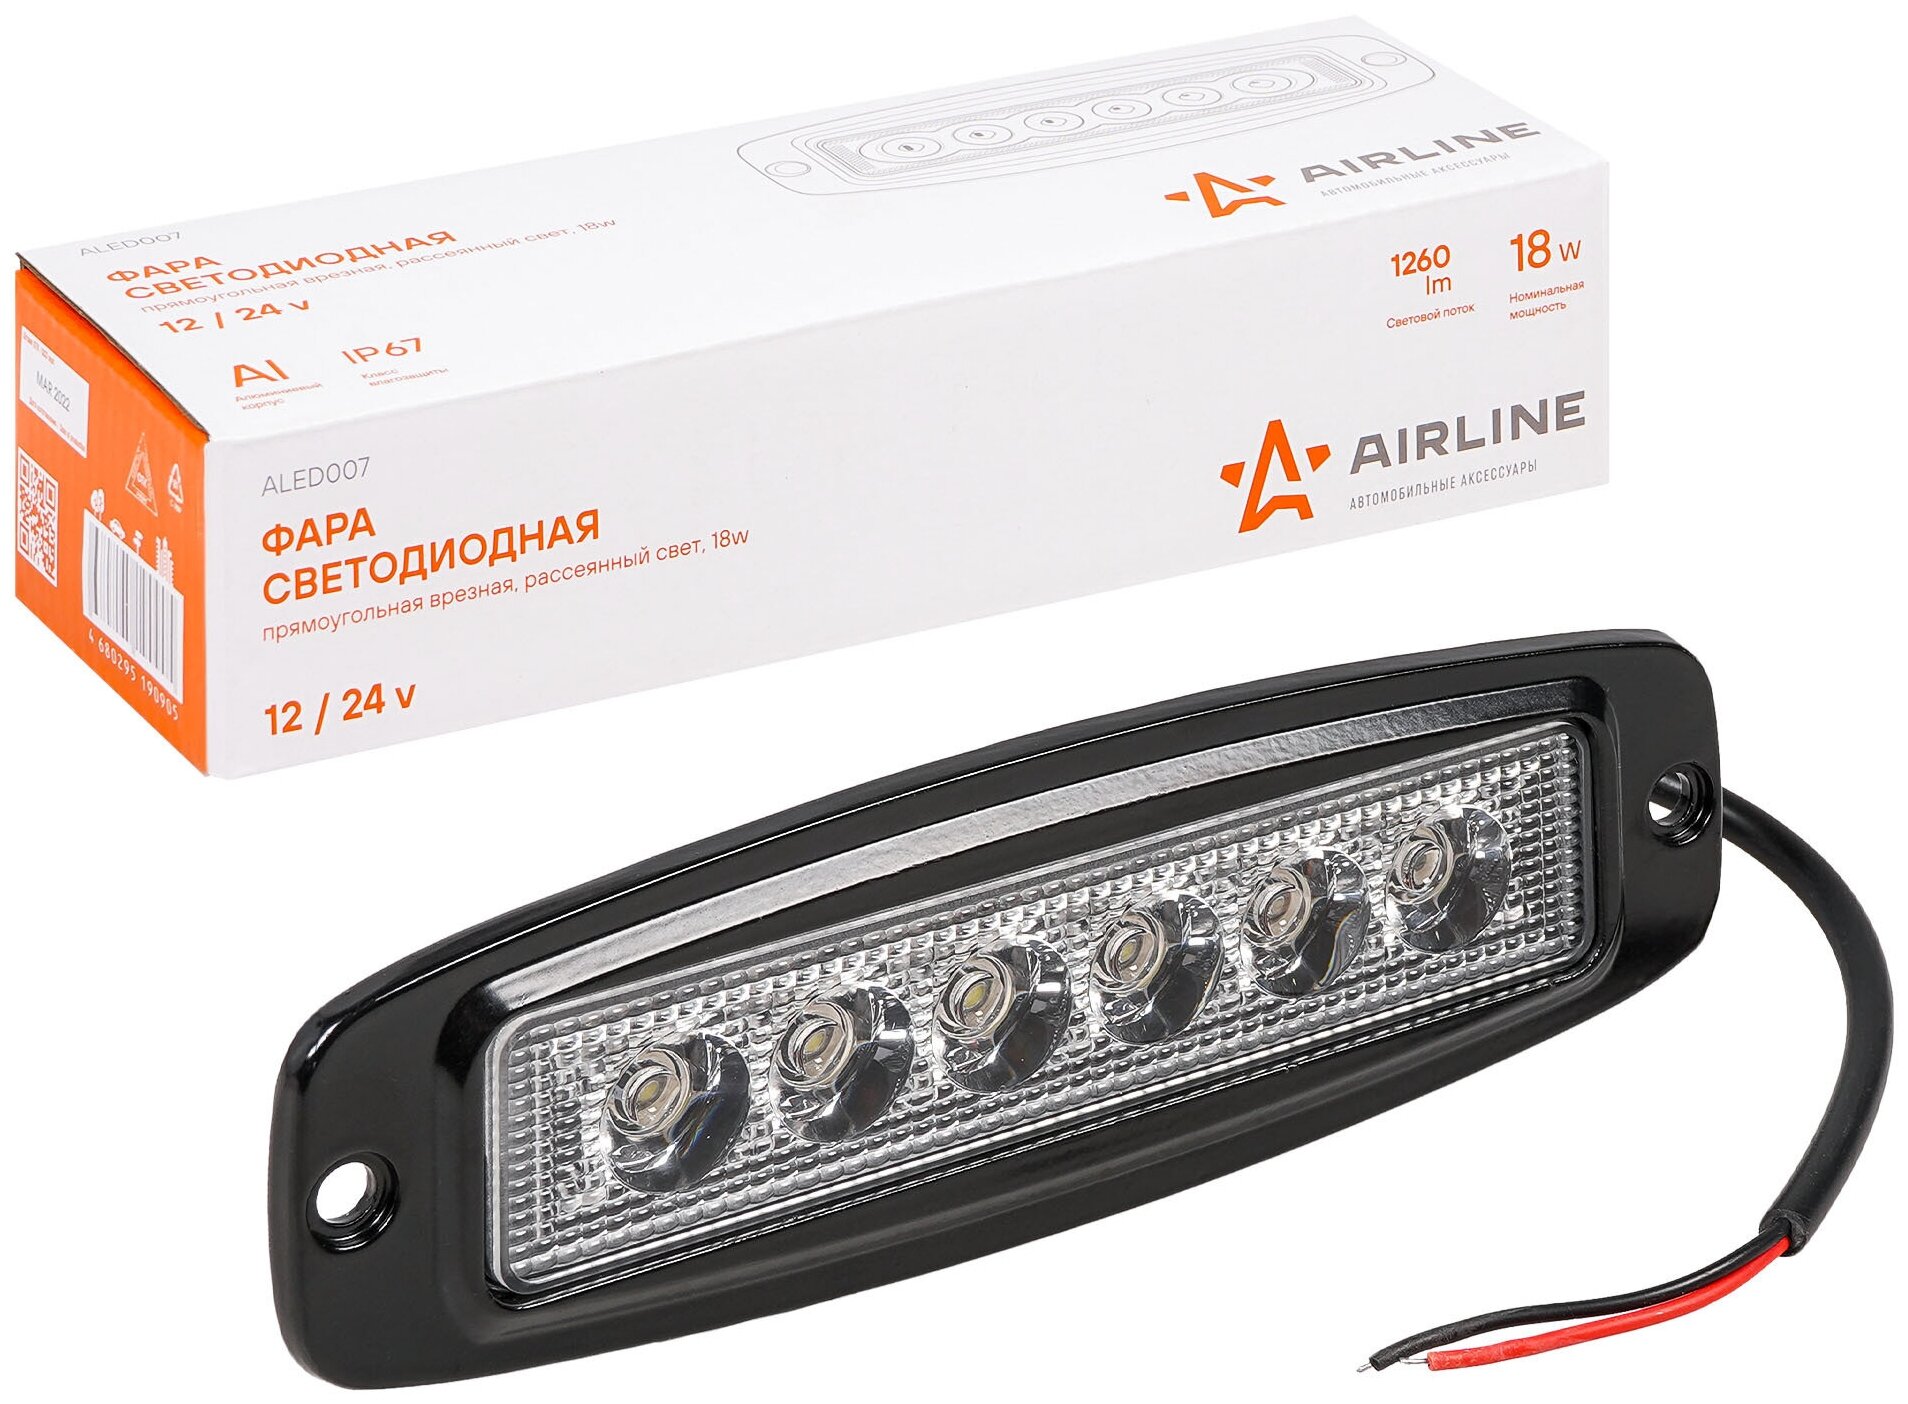 Фара светодиодная прямоугольная врезная 6 LED рассеянный свет 18W (185х60х35) 12/24V (ALED007) AIRLINE